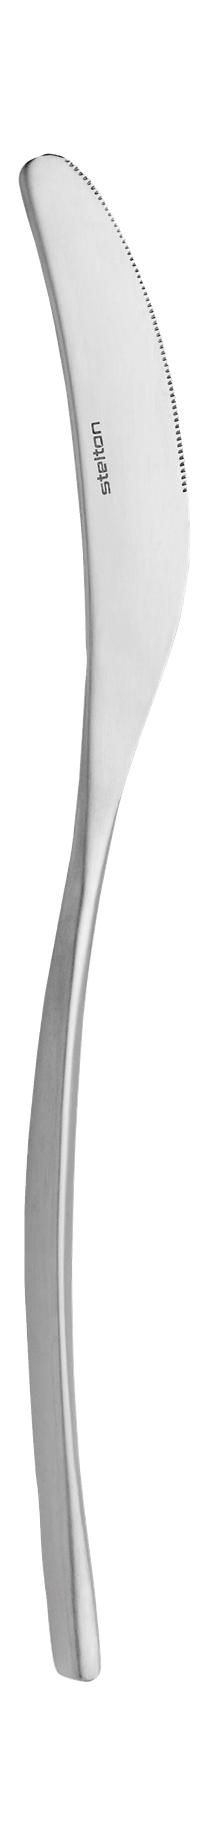 Stelton Capelano bordkniv